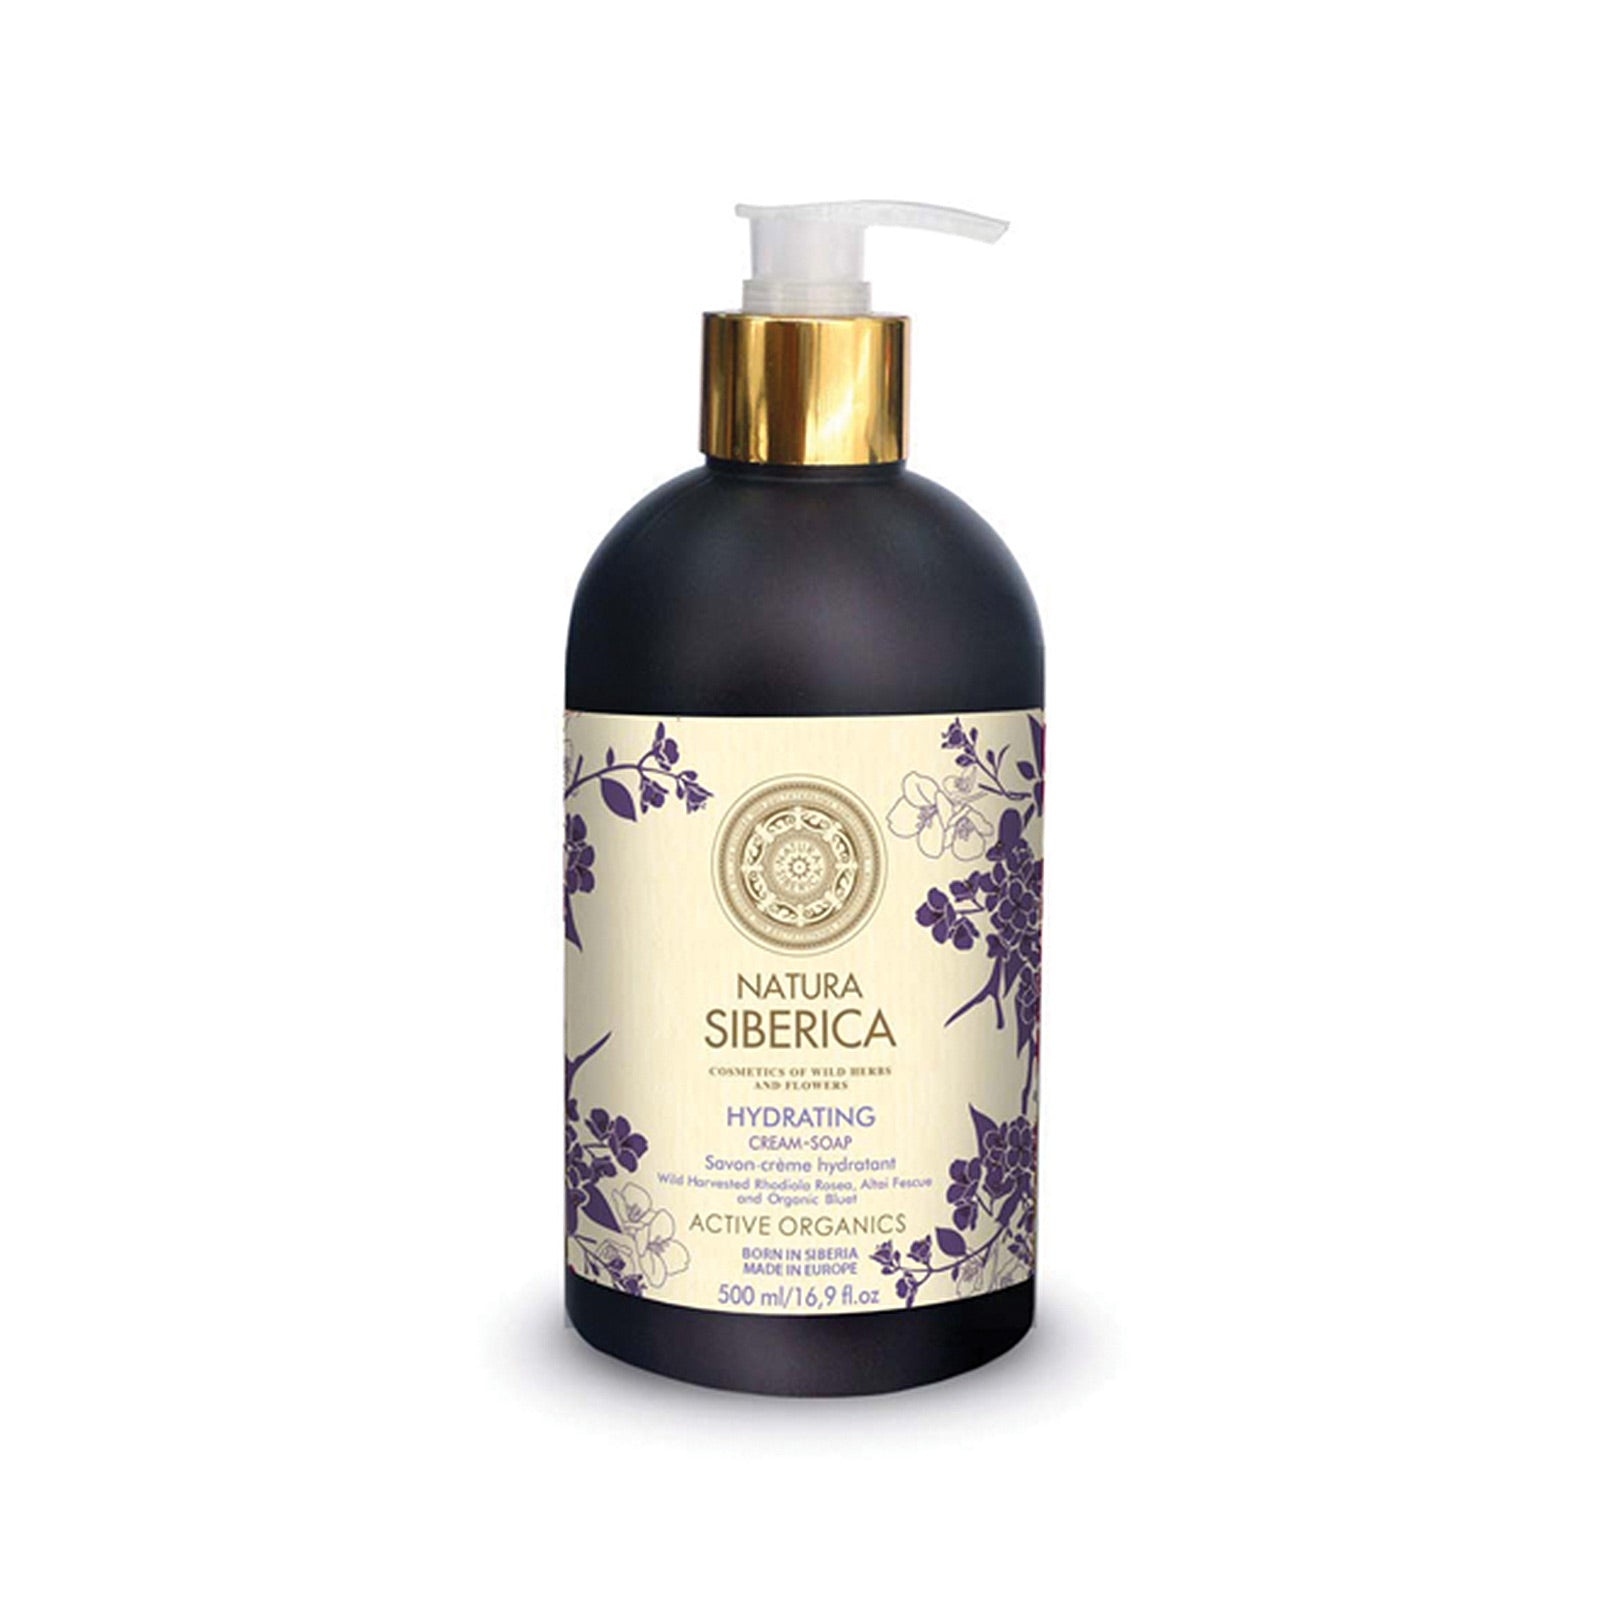 Image of Natura Siberica Hydrating Cream-Soap, 500 ml